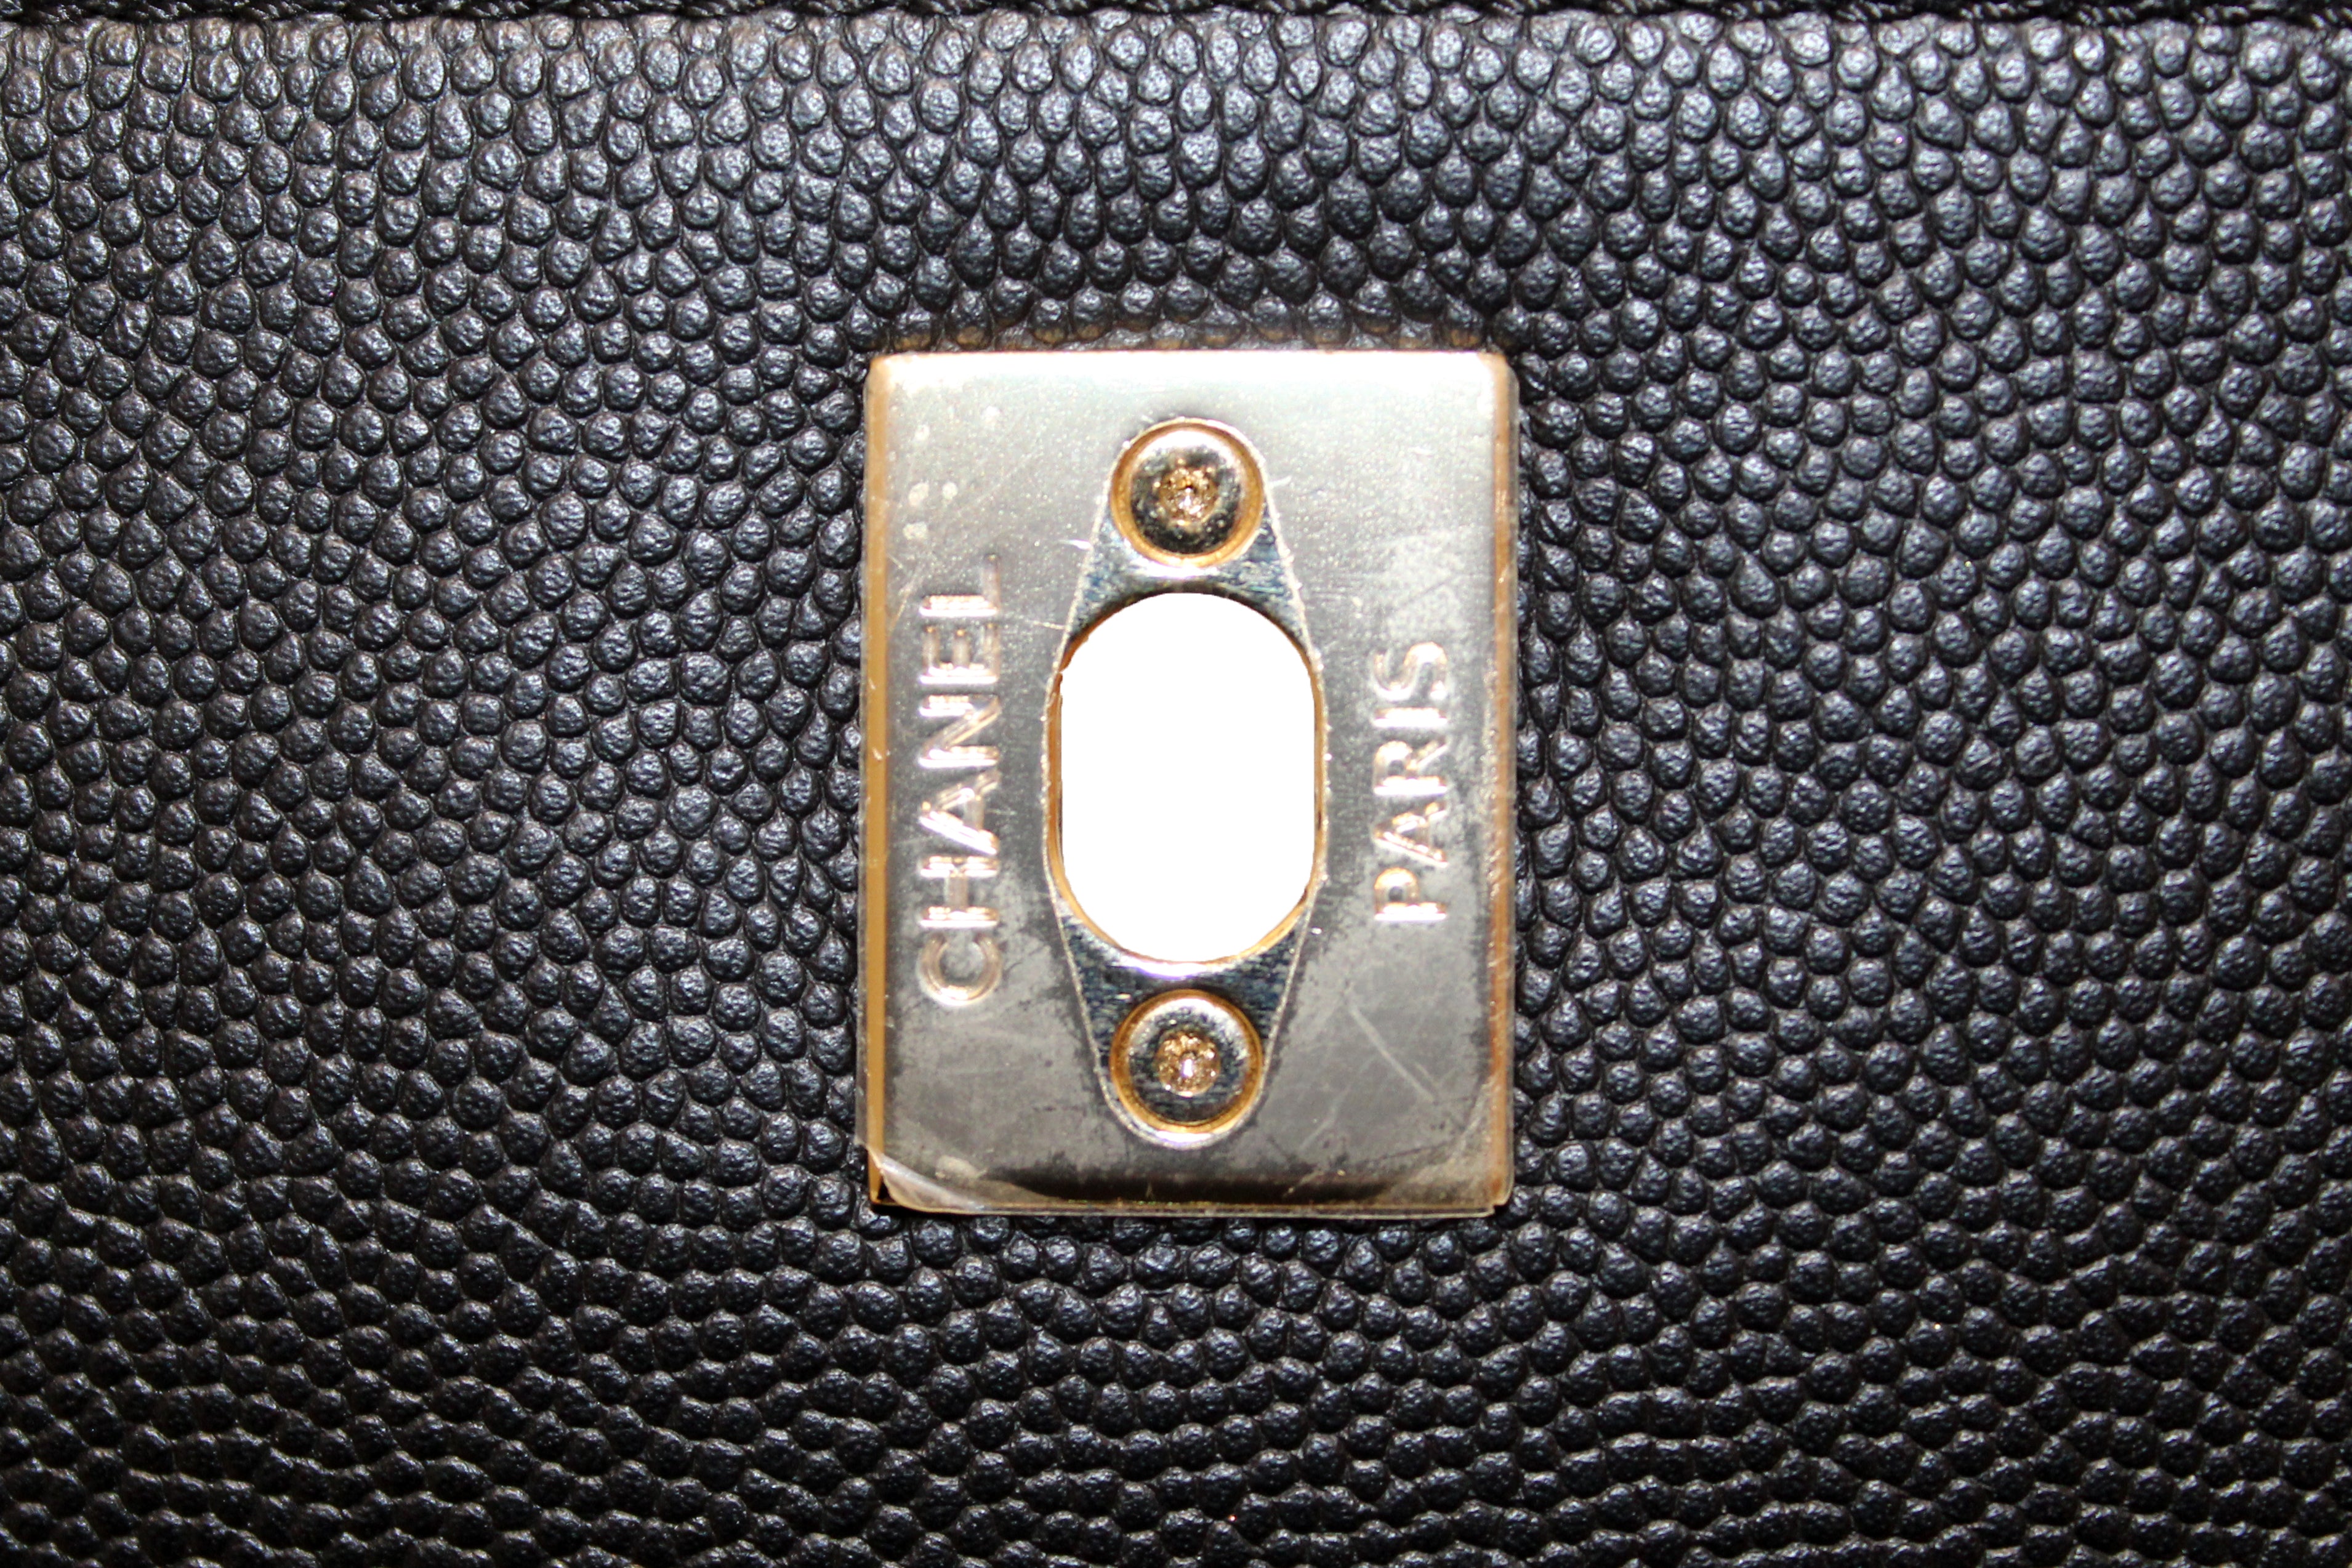 Chanel Blue Caviar Classic Business Affinity Flap Crossbody Bag